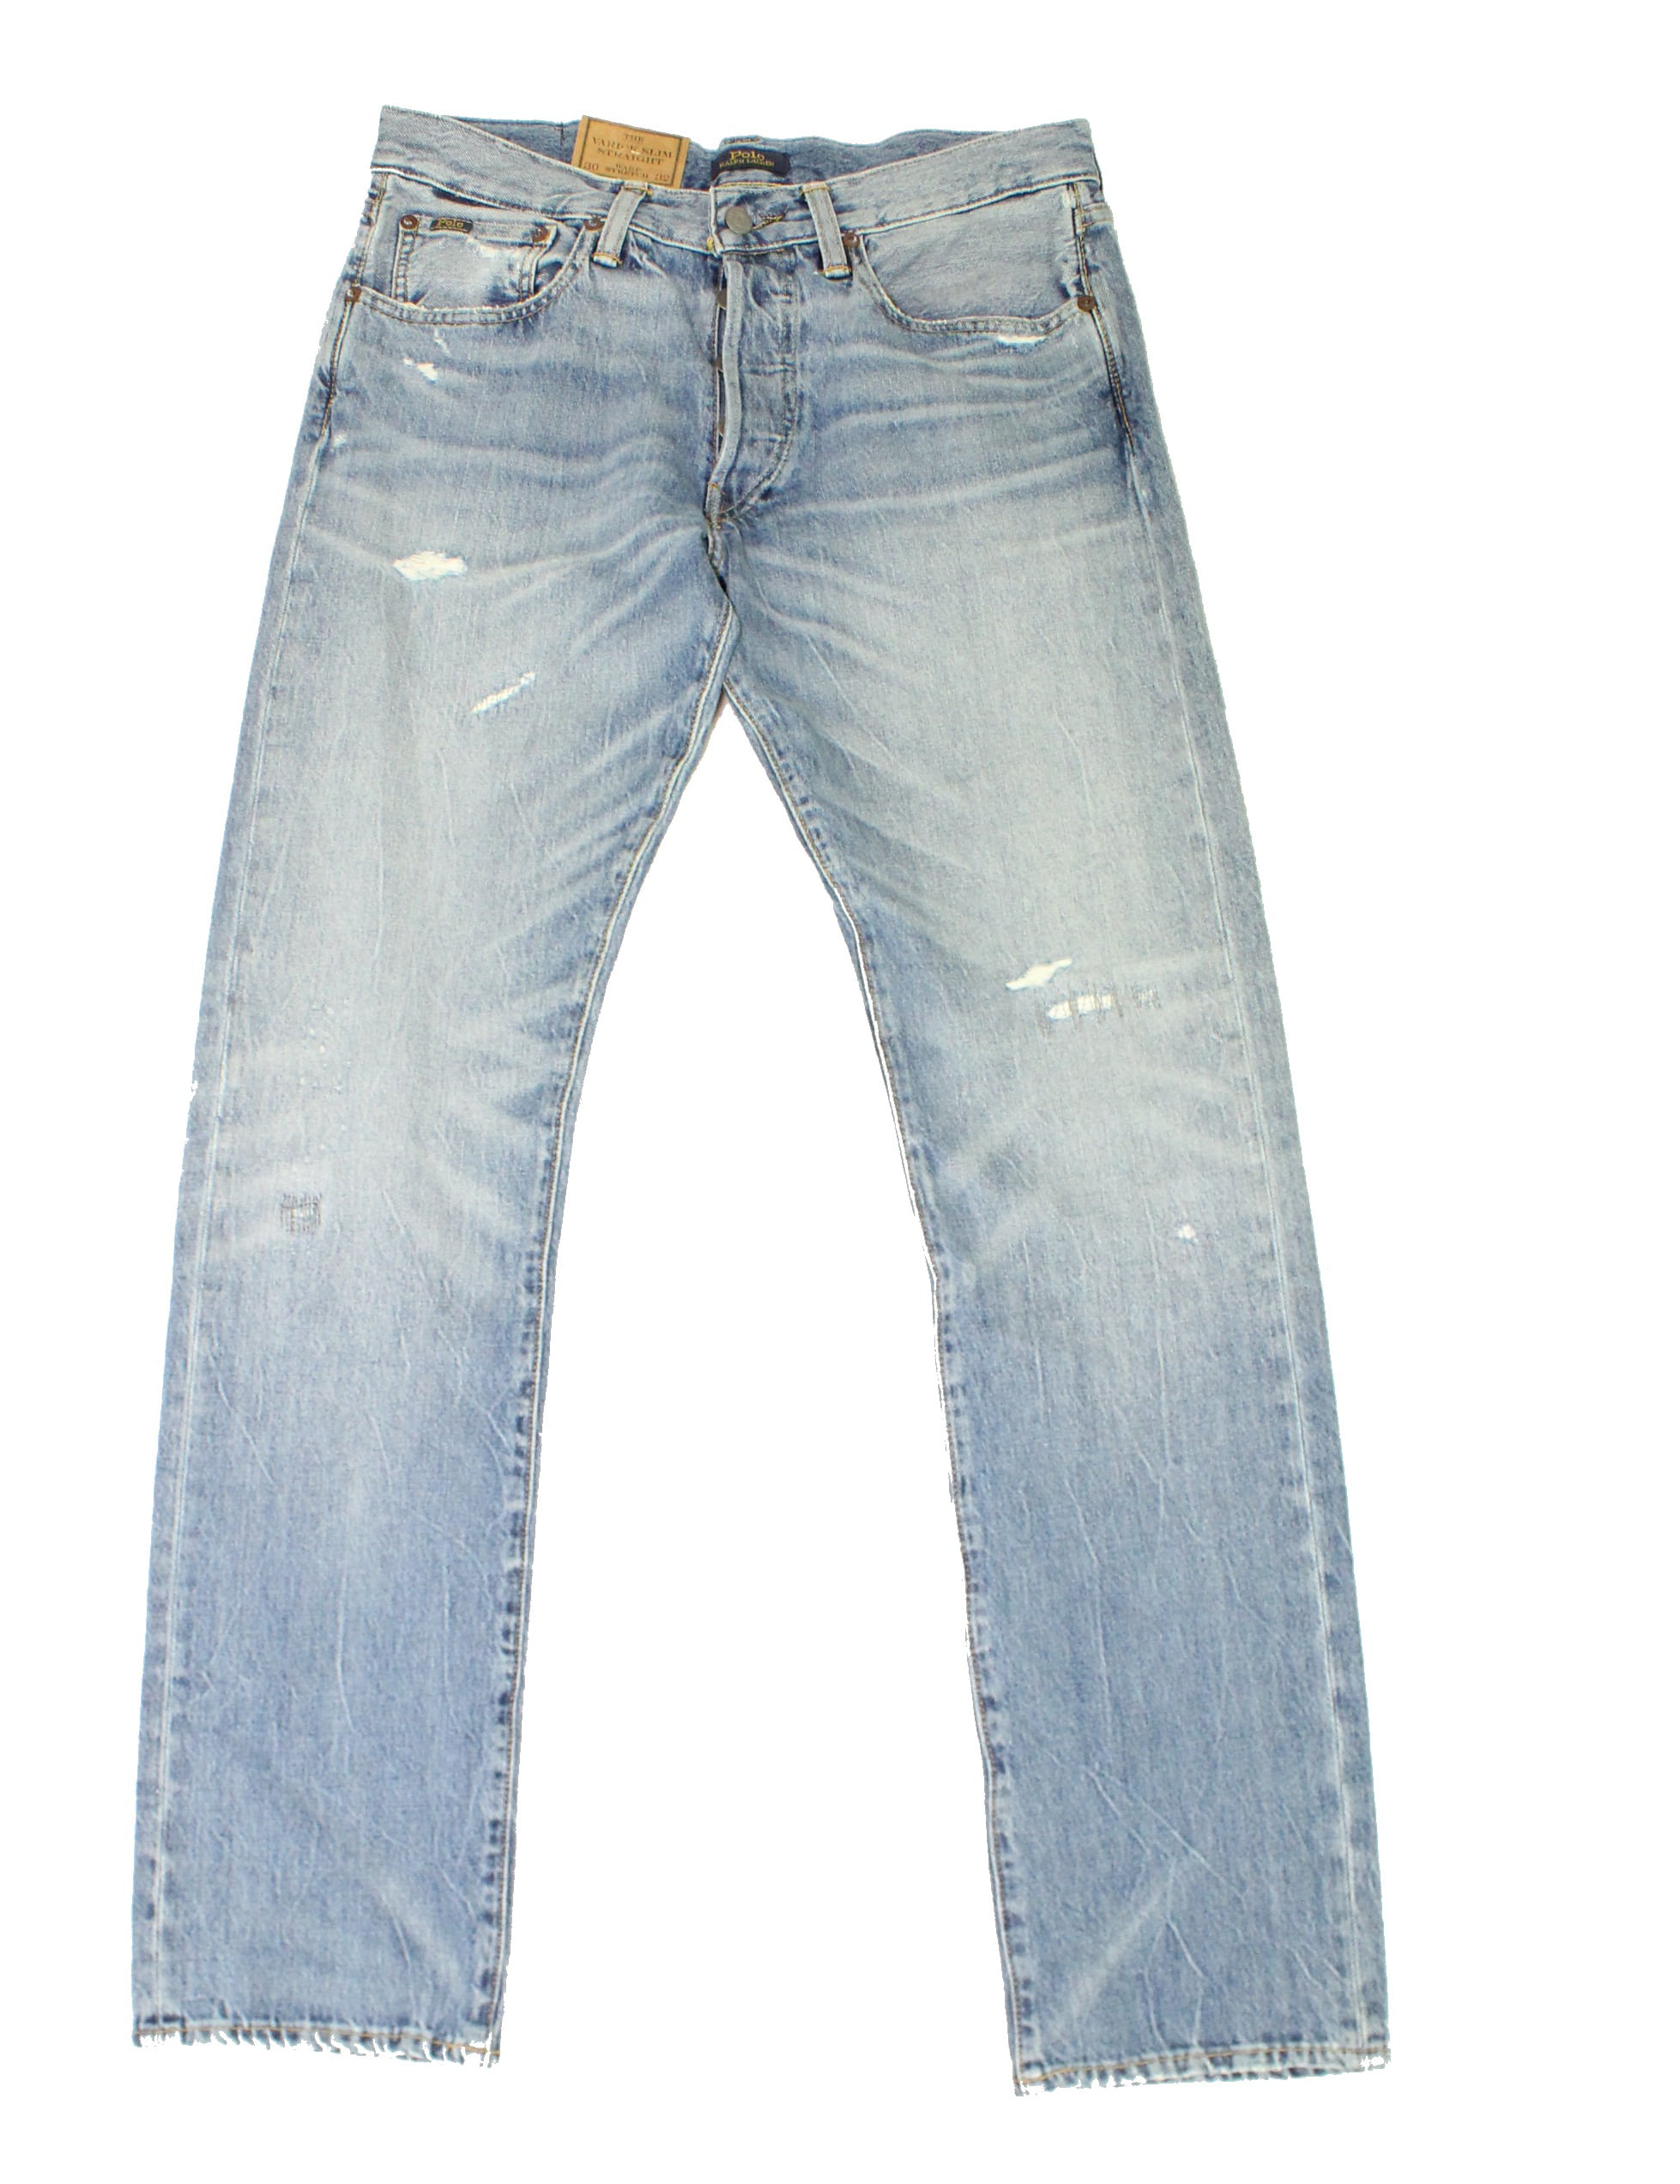 Ralph Lauren Jeans Size Chart